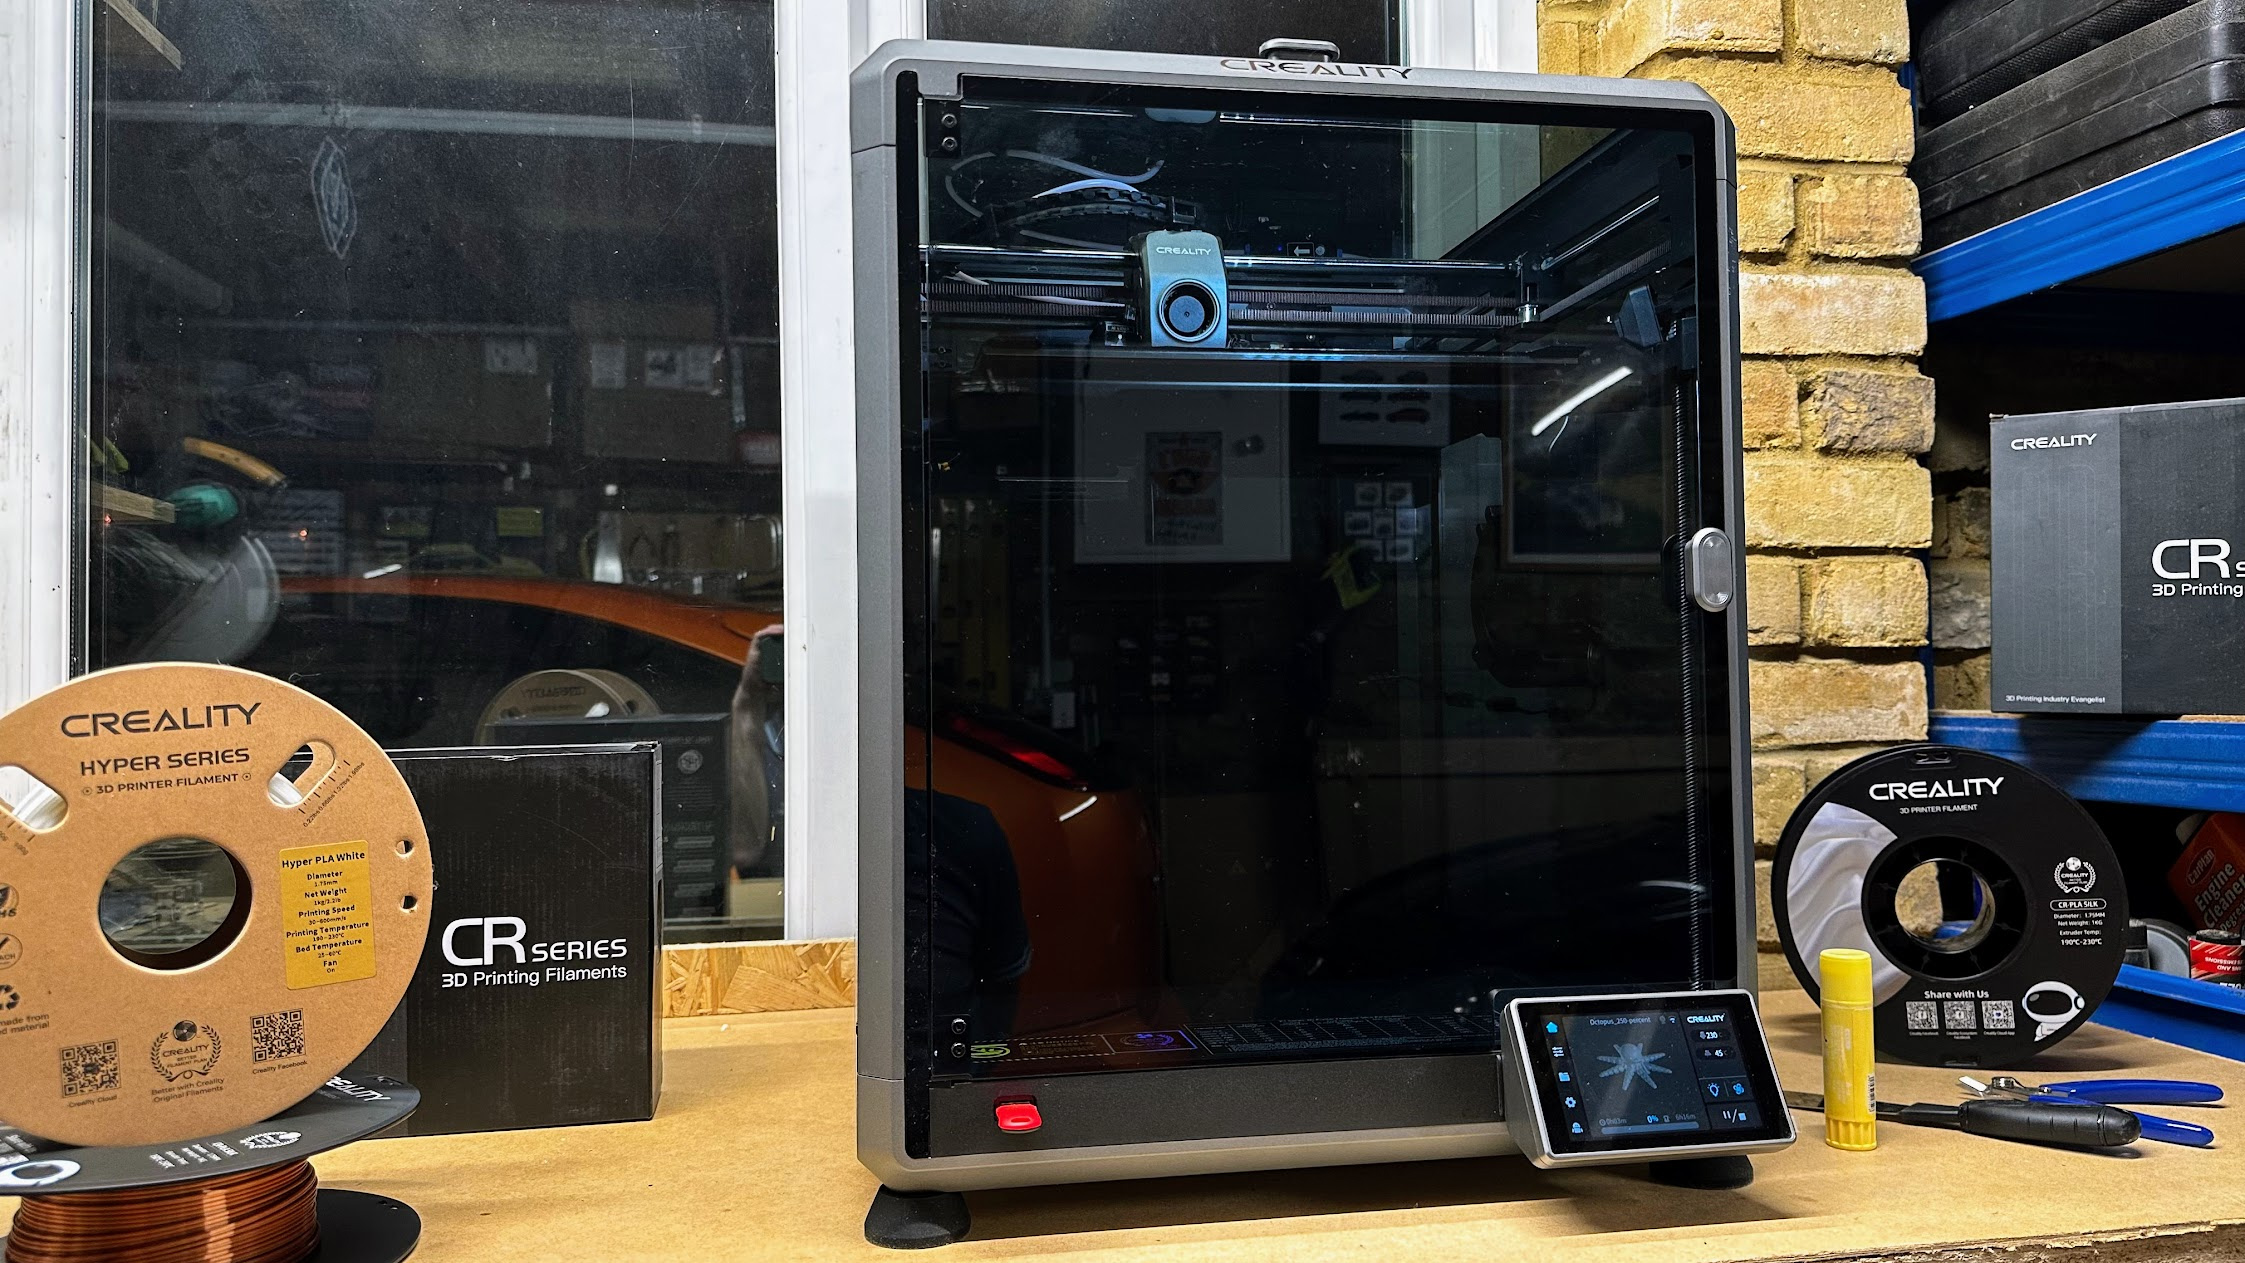 Creality K1 Max - Best large 3D printer